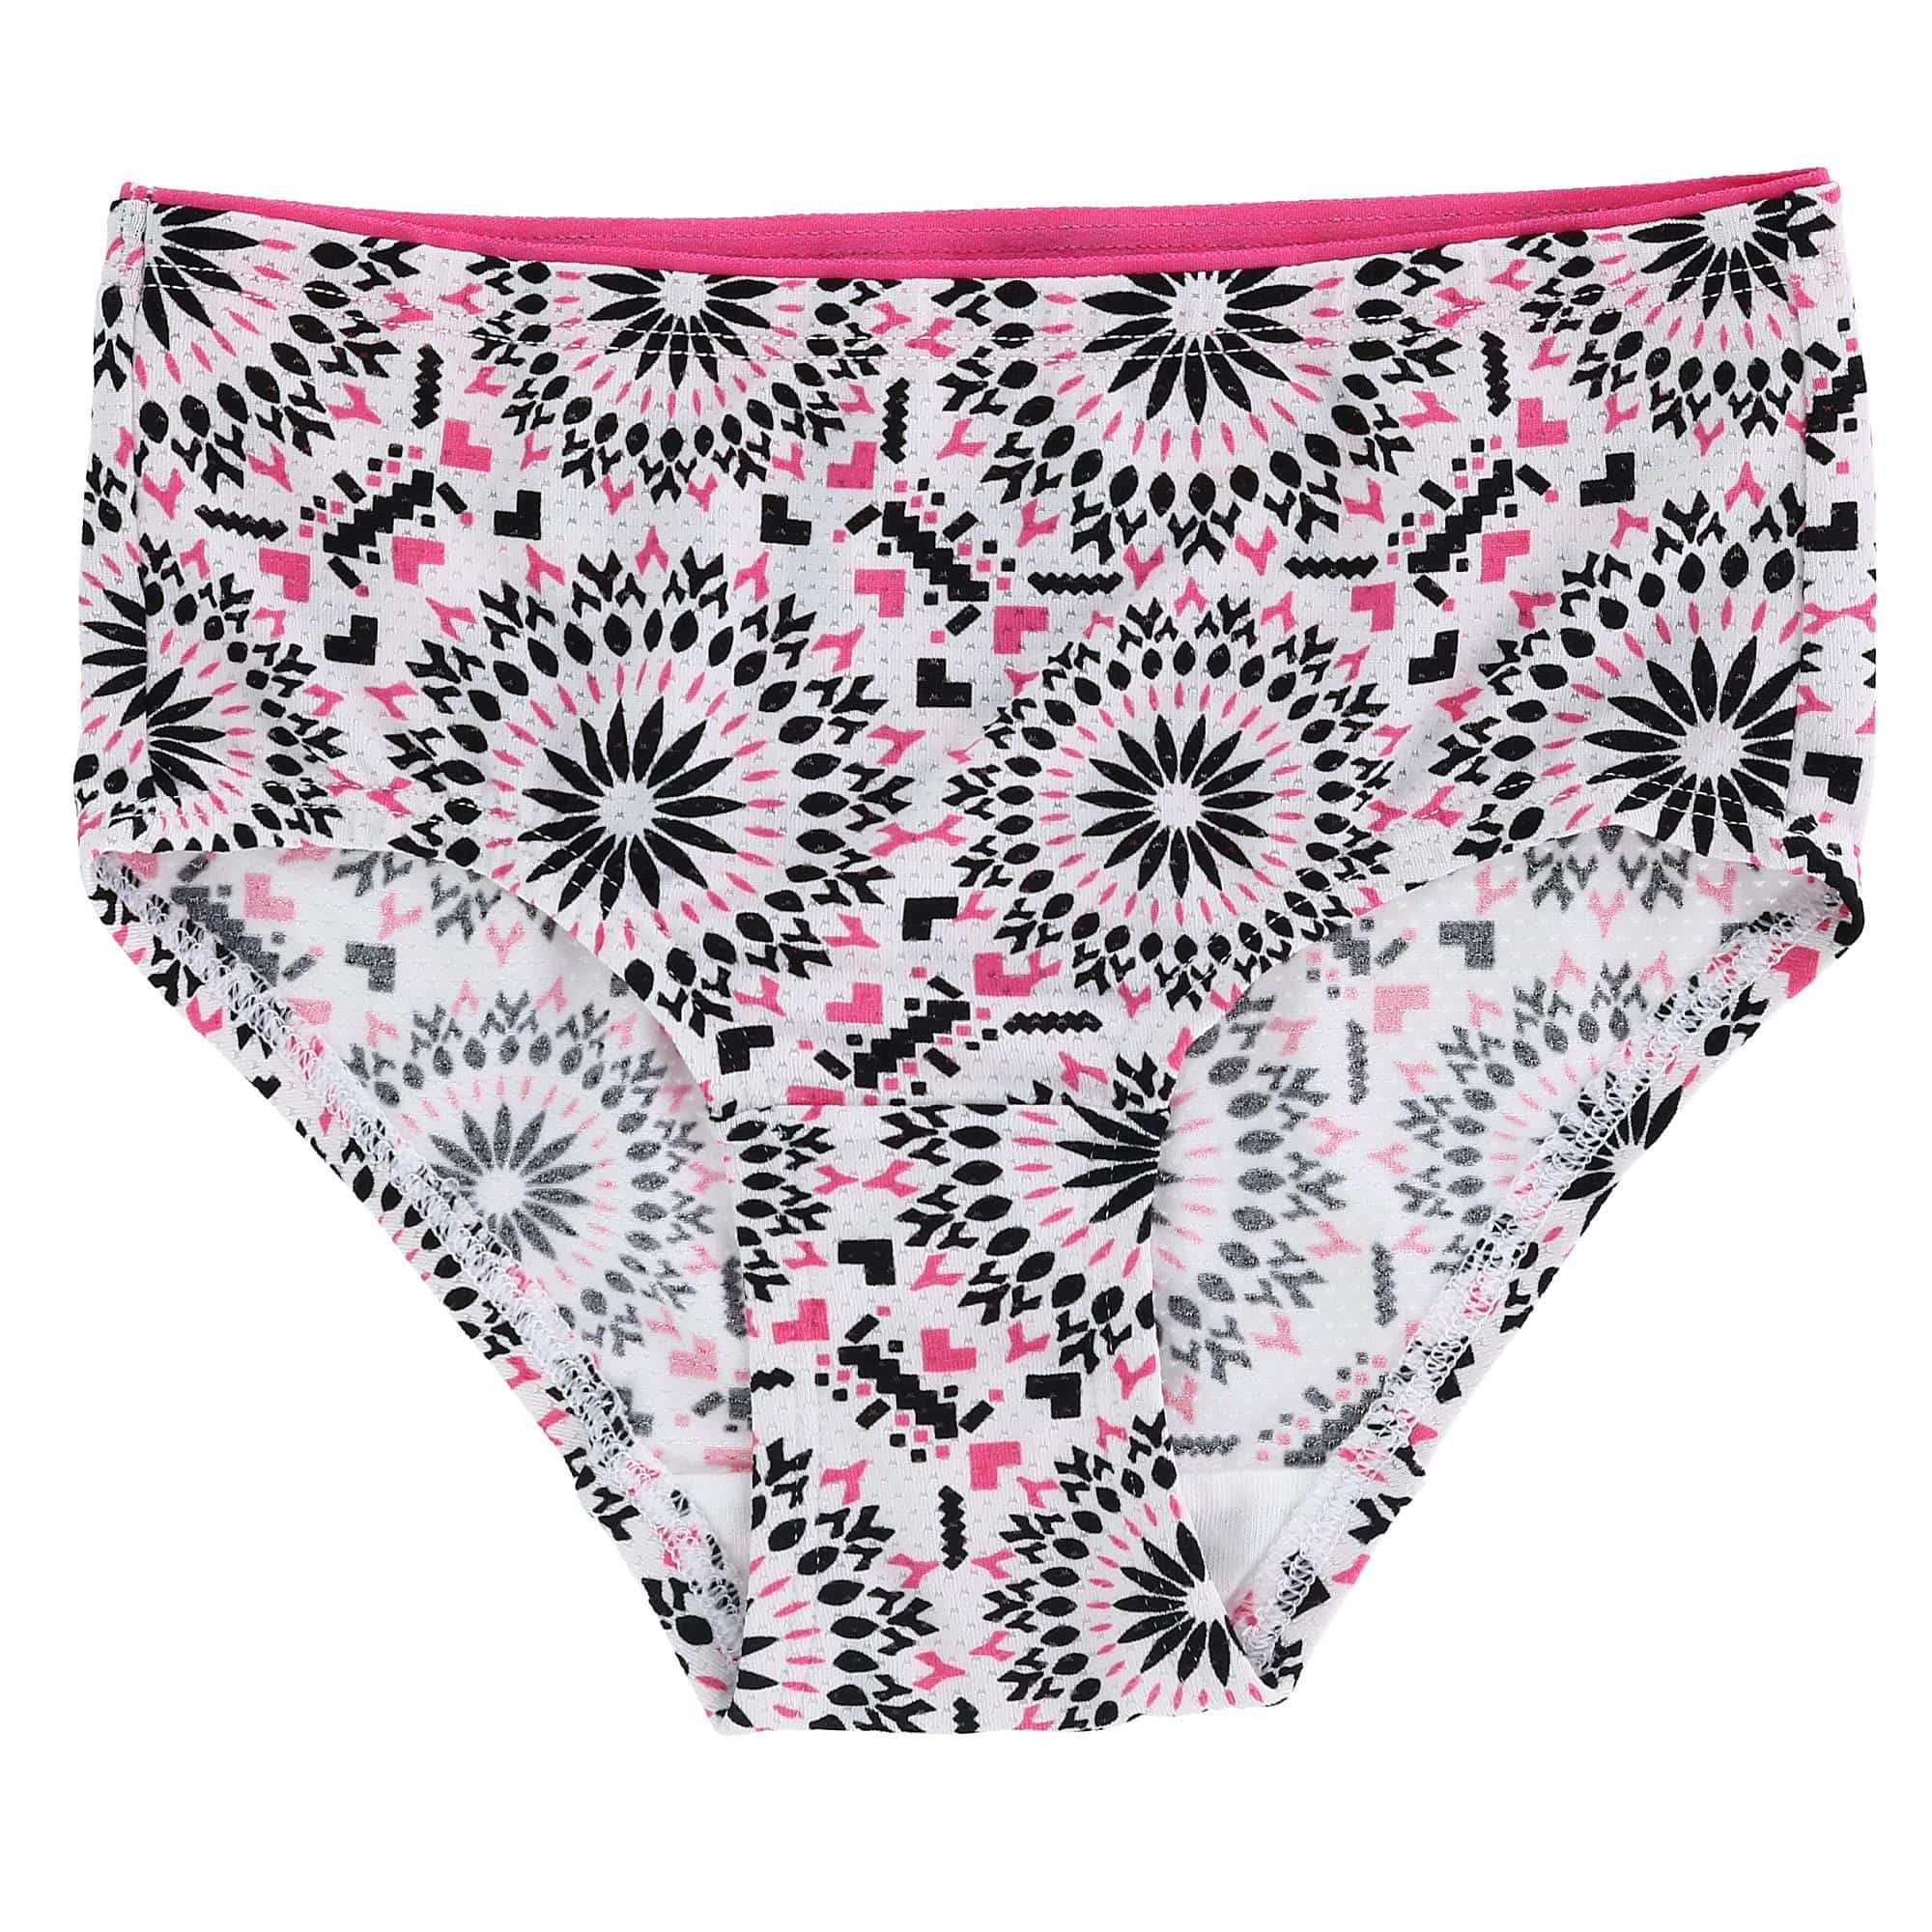 Fruit of the Loom Women's Breathable Micro Mesh Bikini Underwear (4 Pair  Pack)